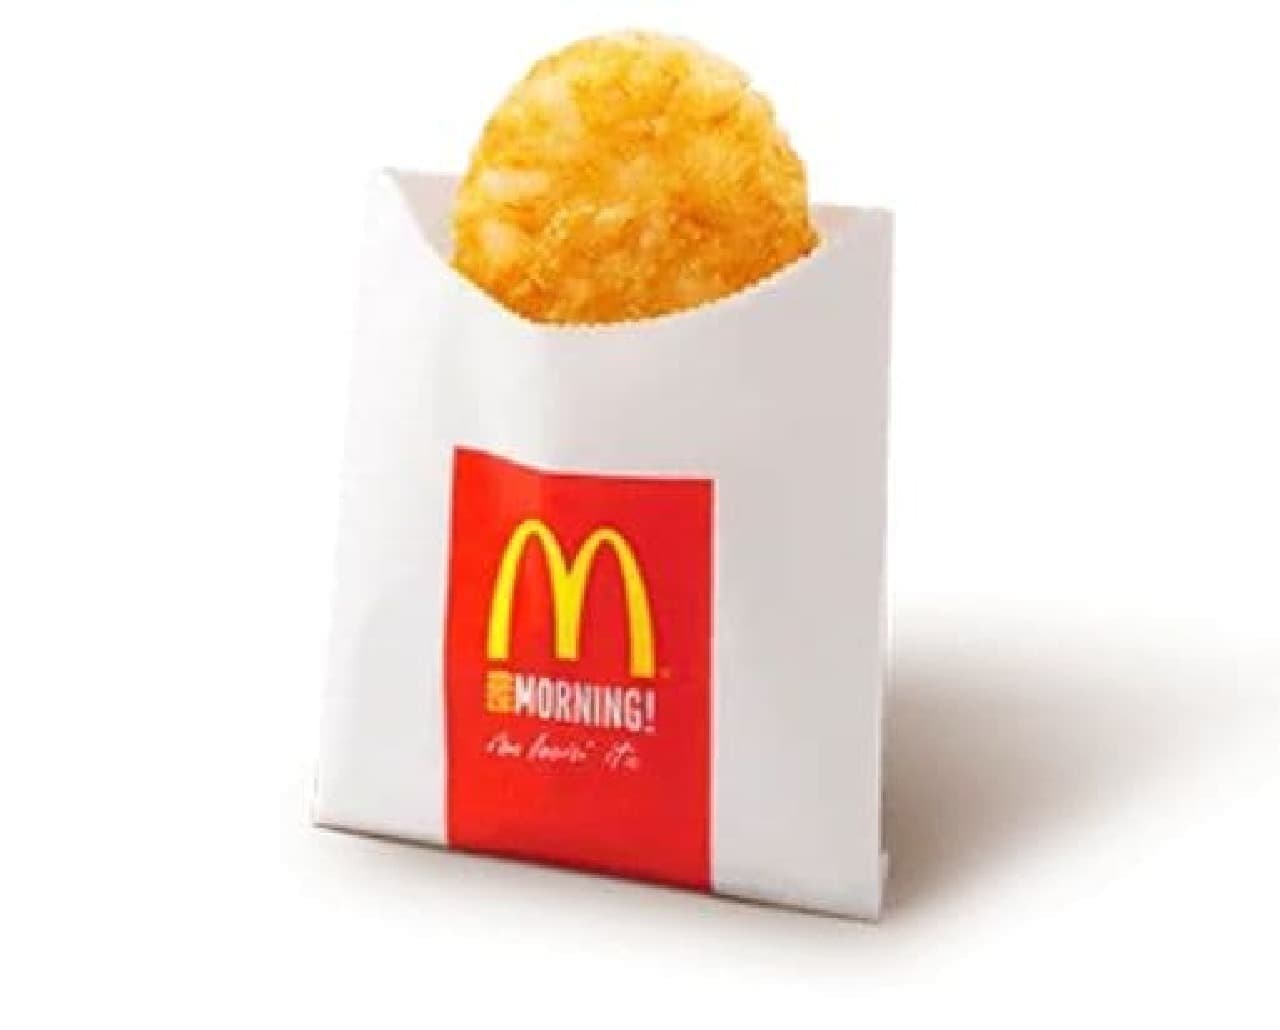 McDonald's "Hash Potatoes"